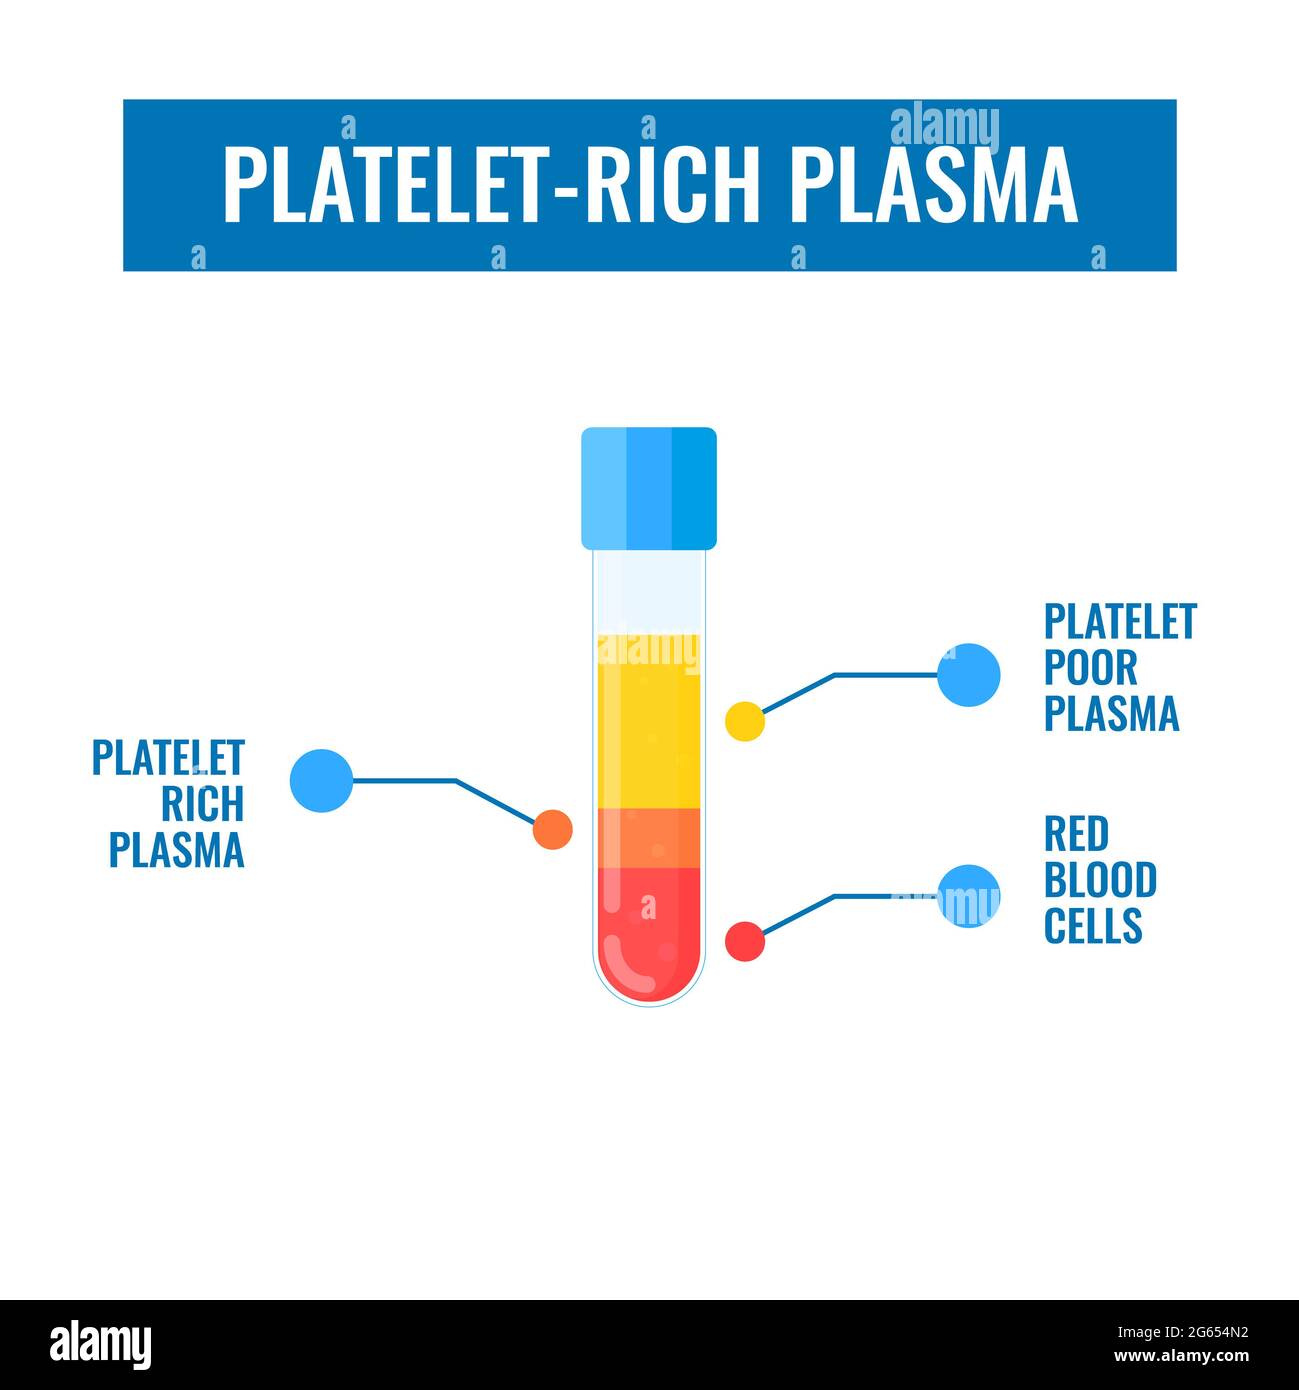 Platelet-rich plasma, illustration Stock Photo